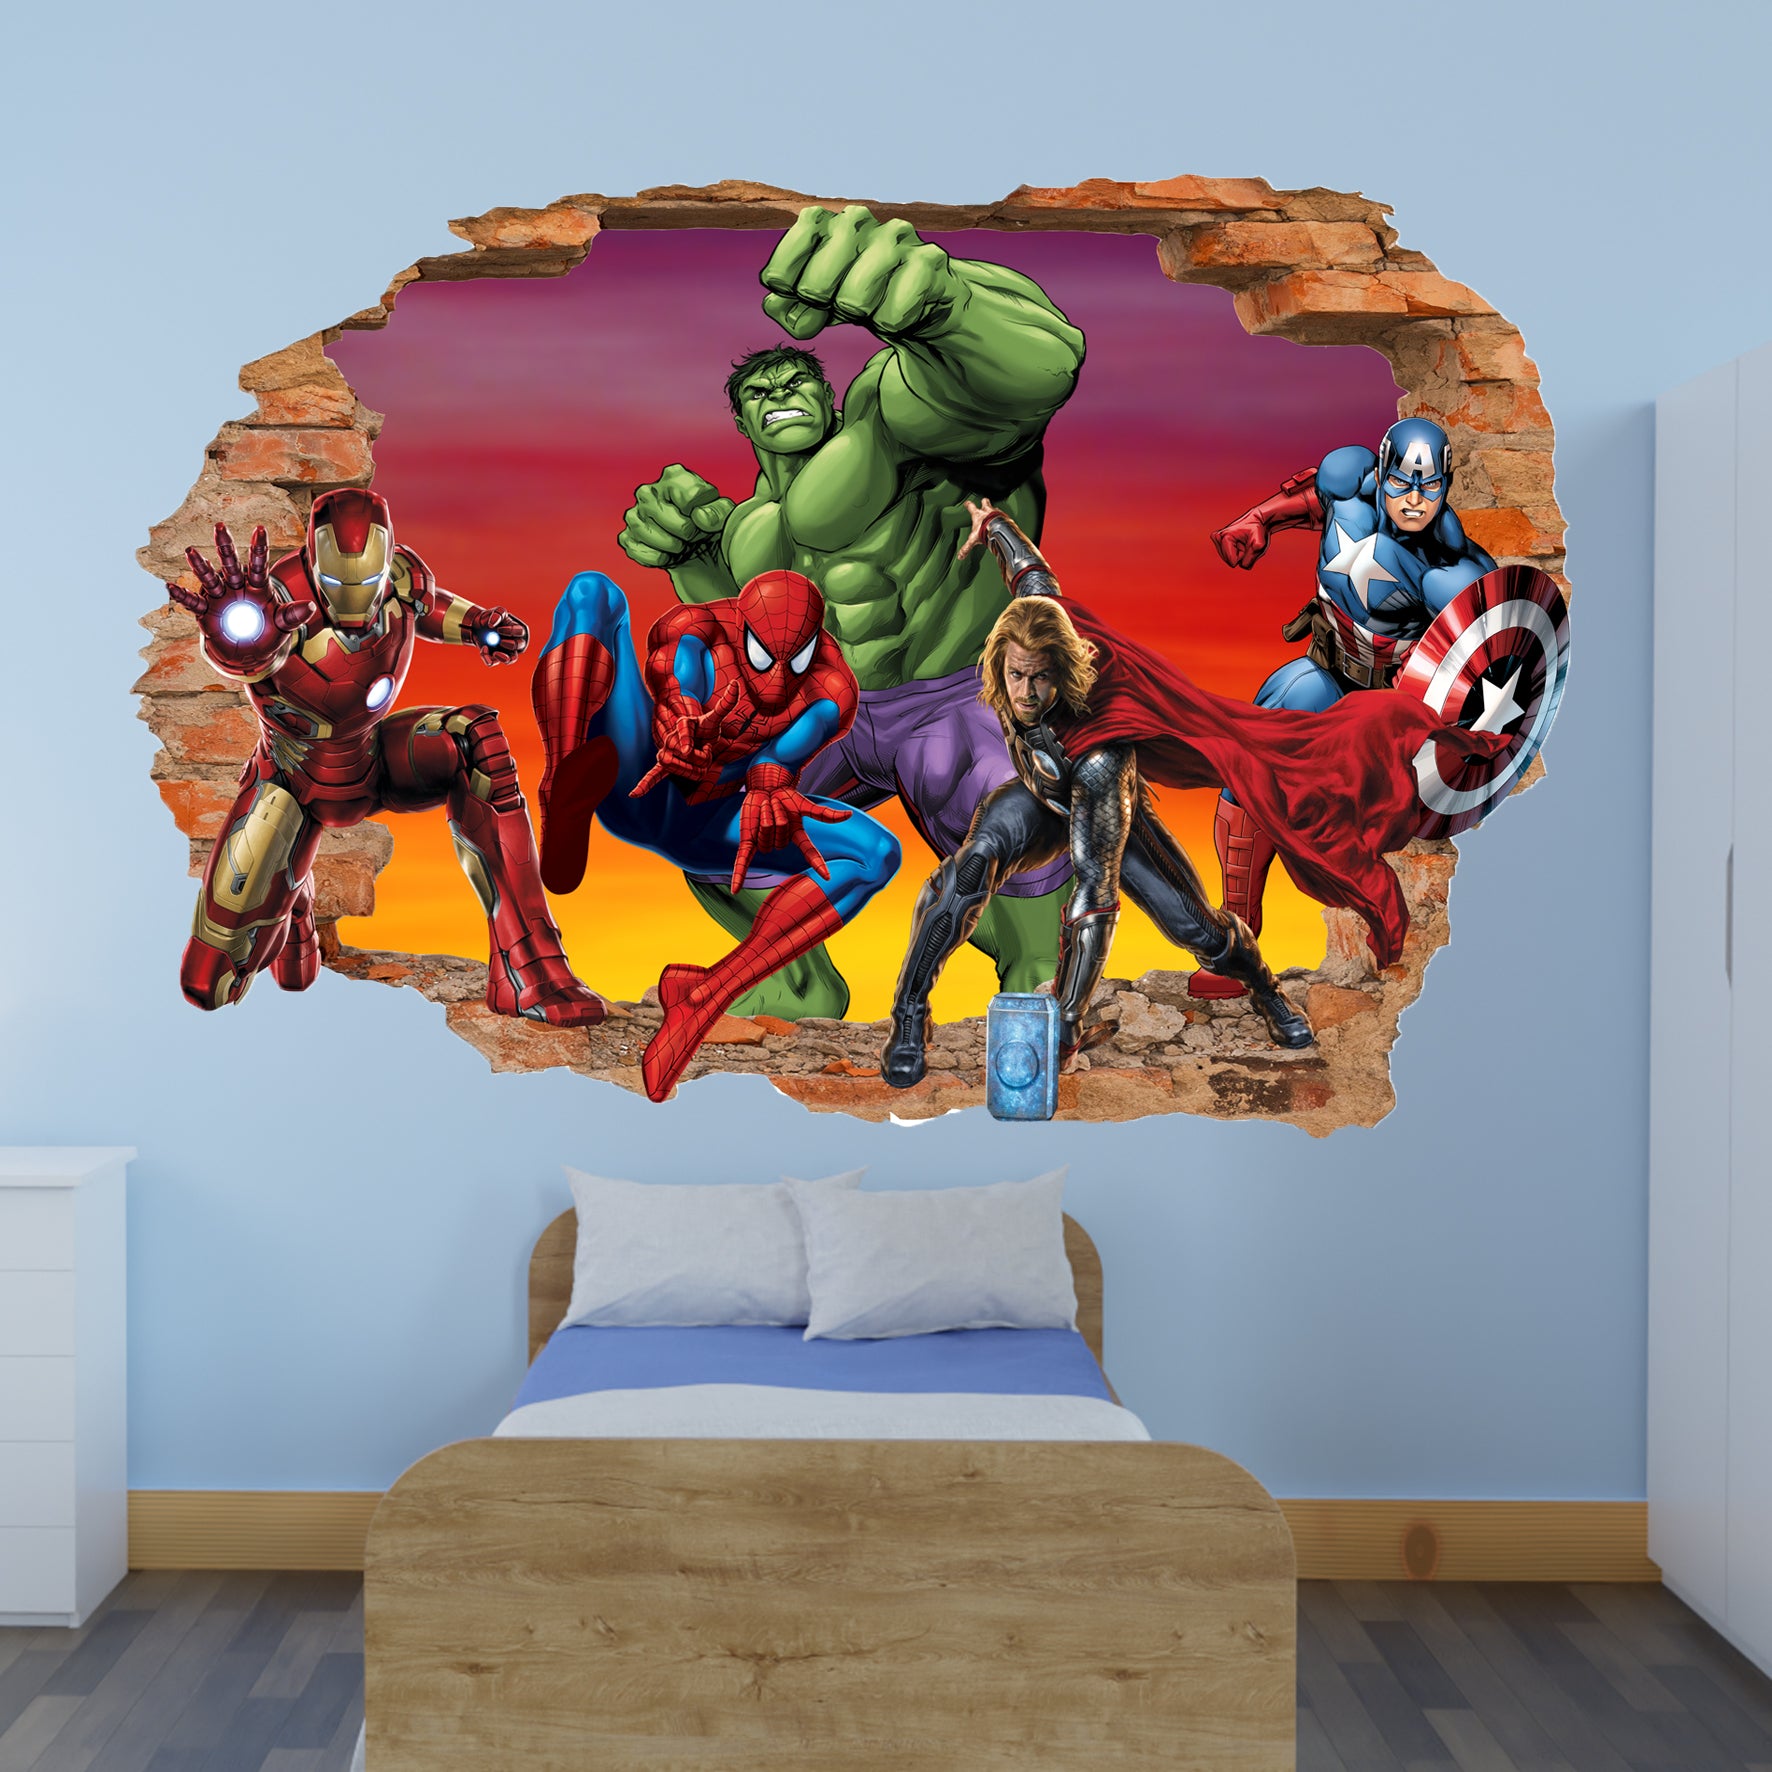 Premium Avengers Wall Sticker for Fans